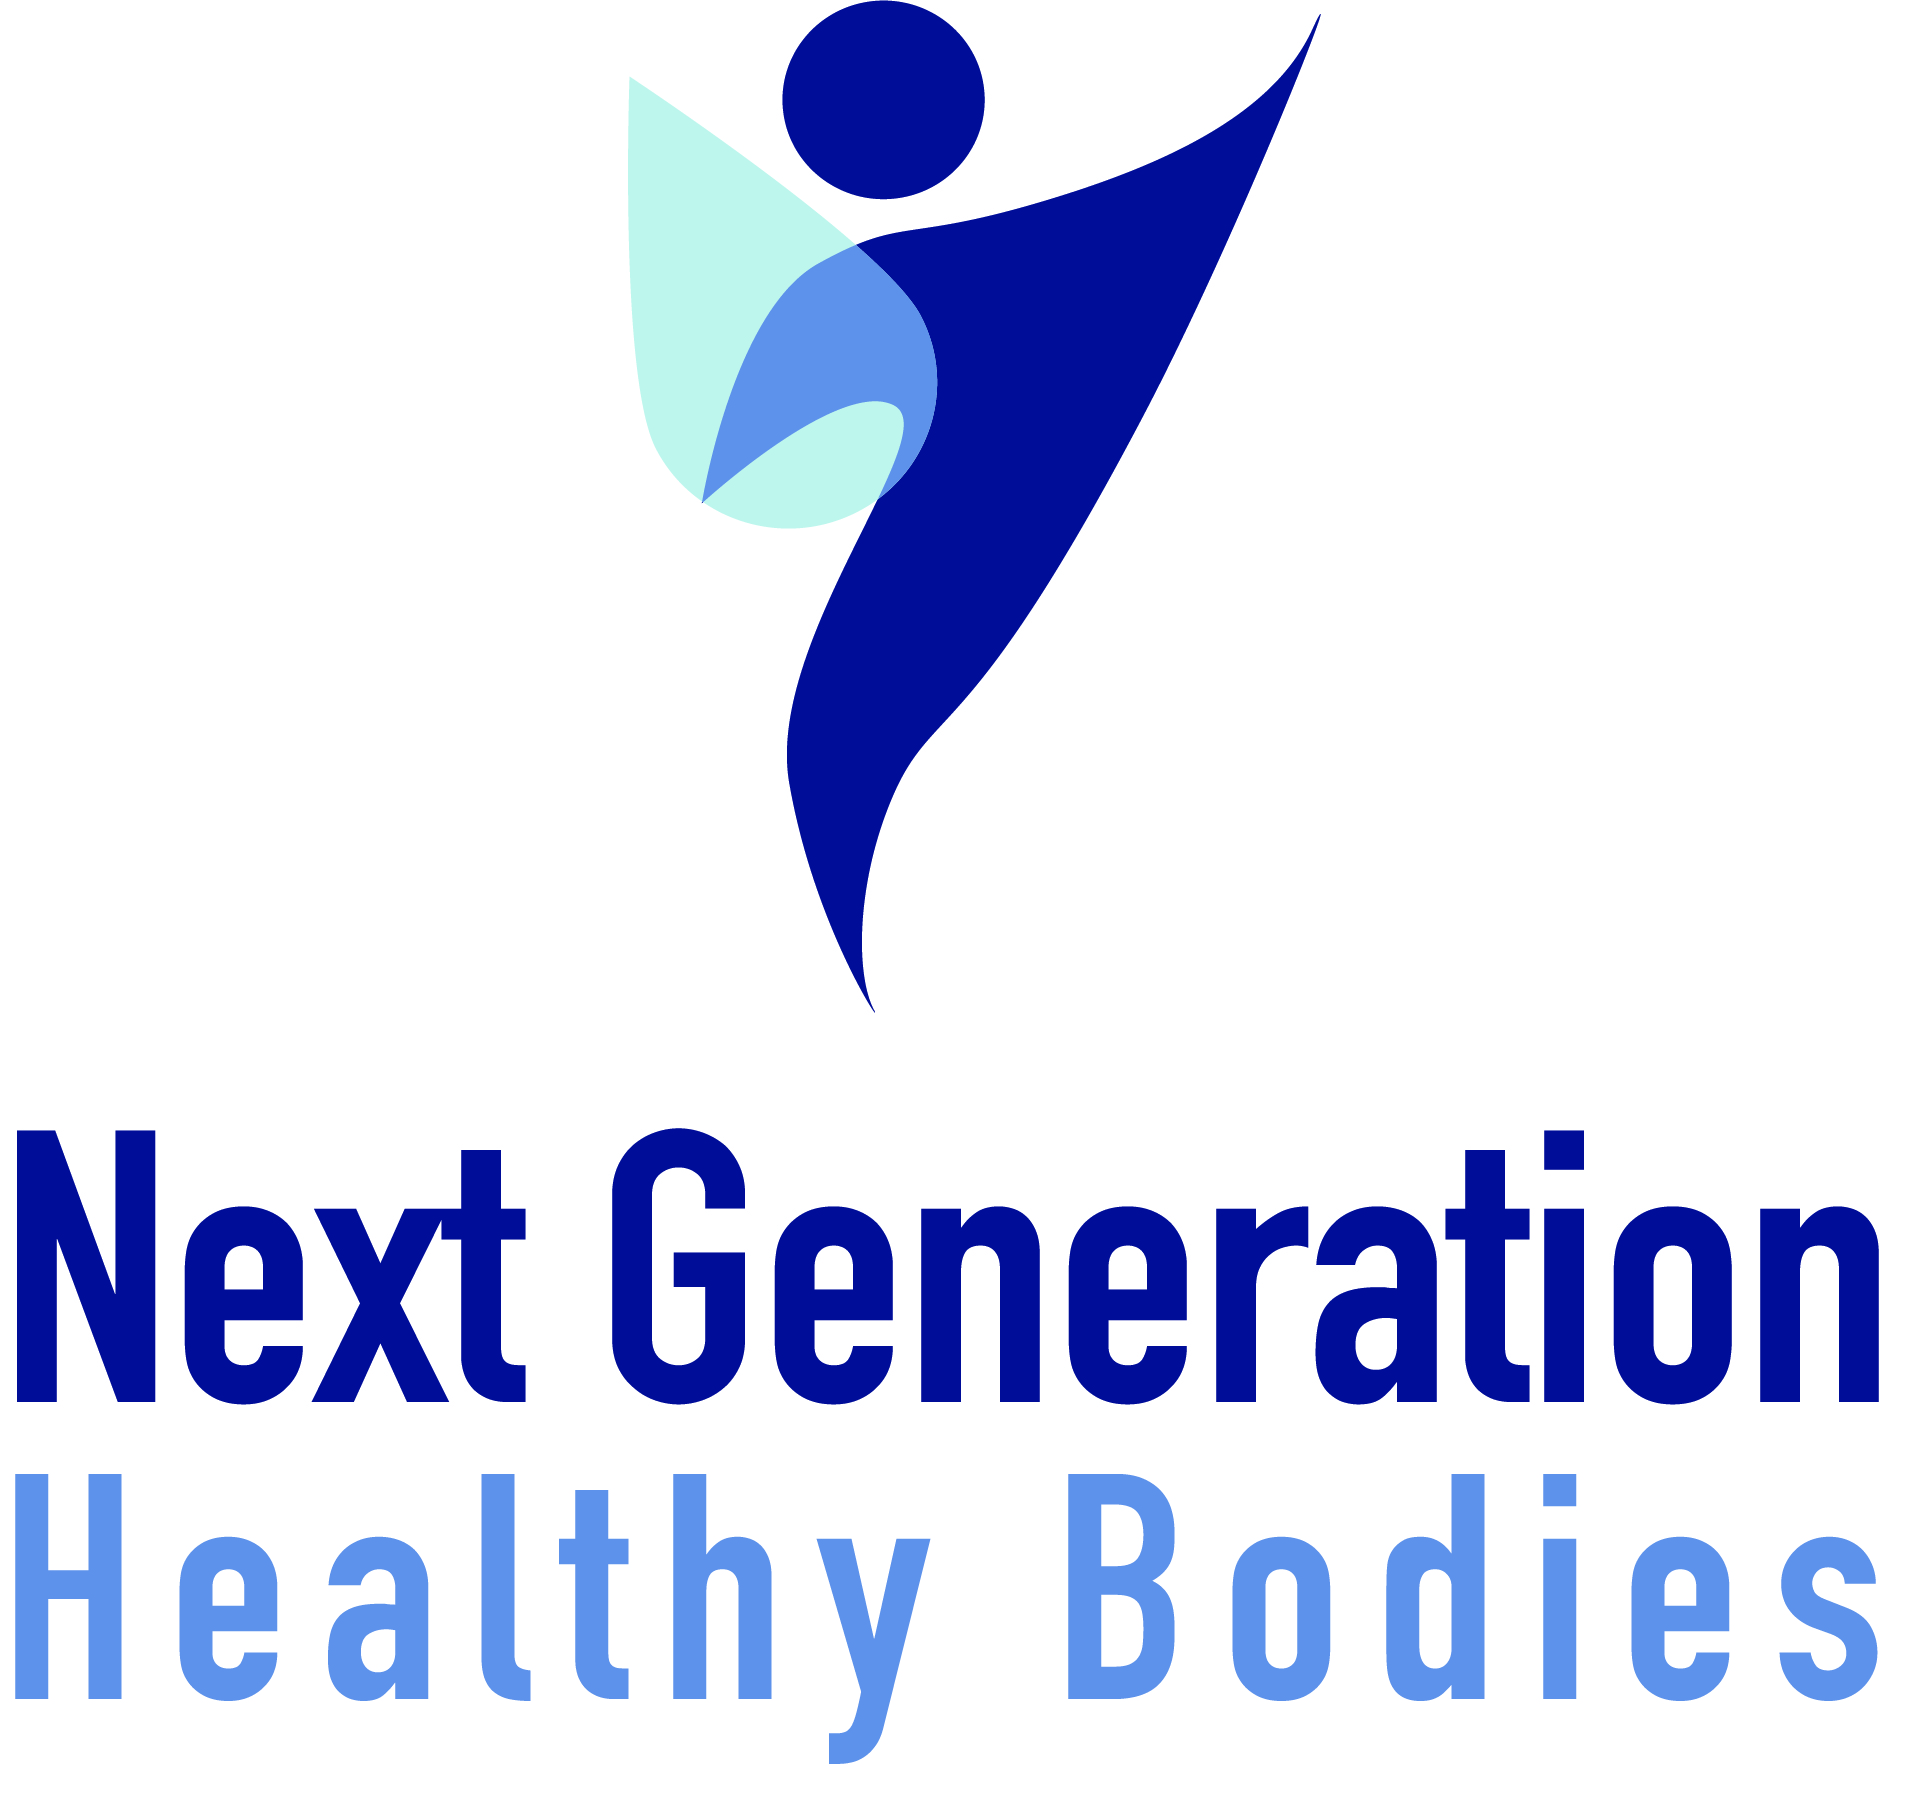 Next Generation Healthy Bodies